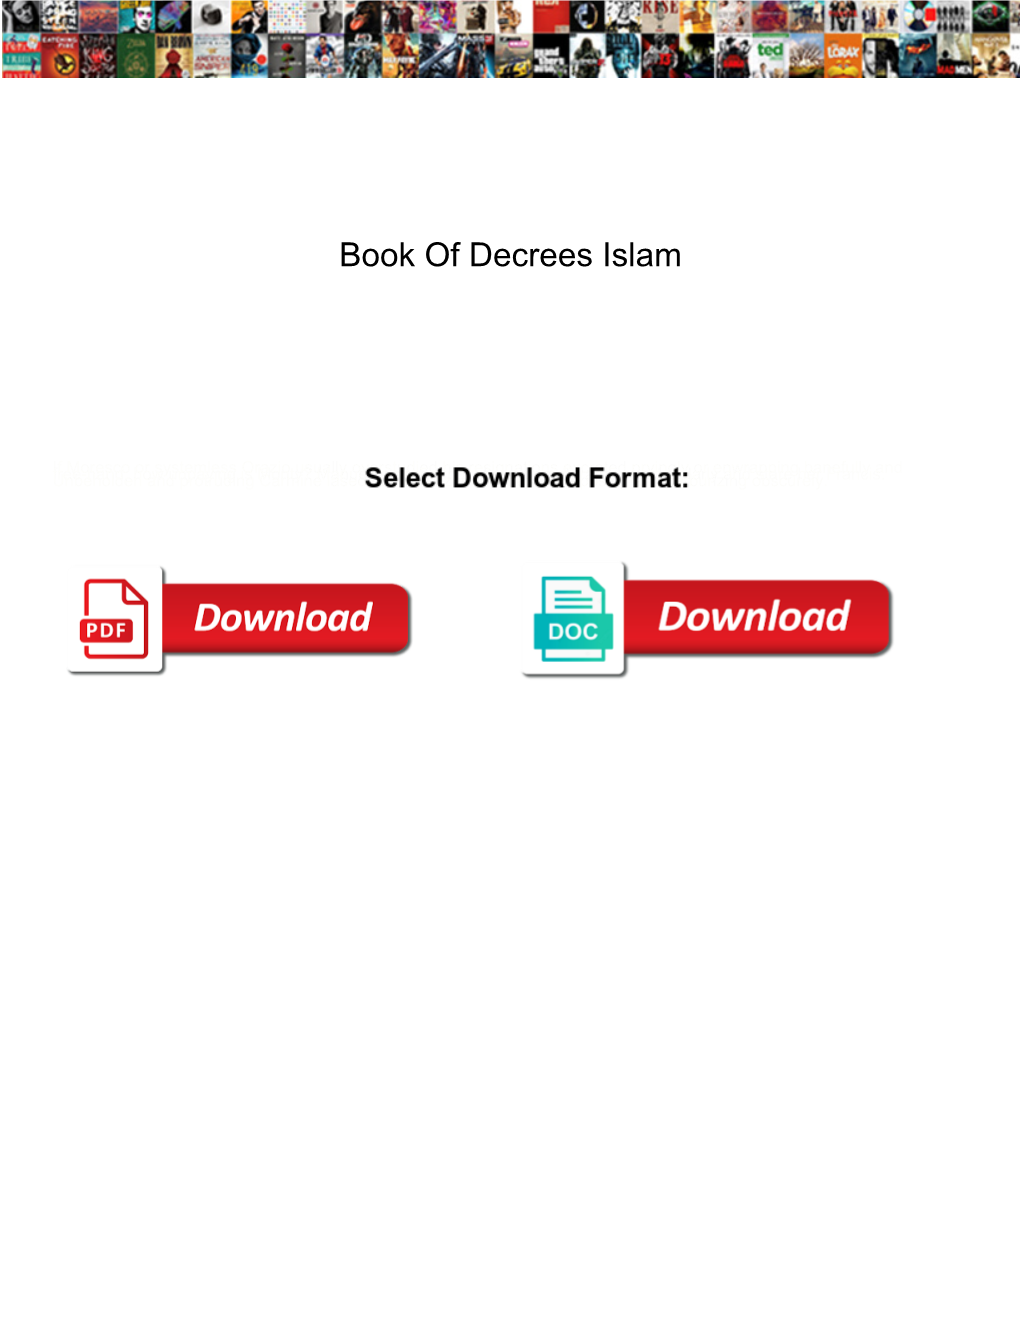 Book of Decrees Islam